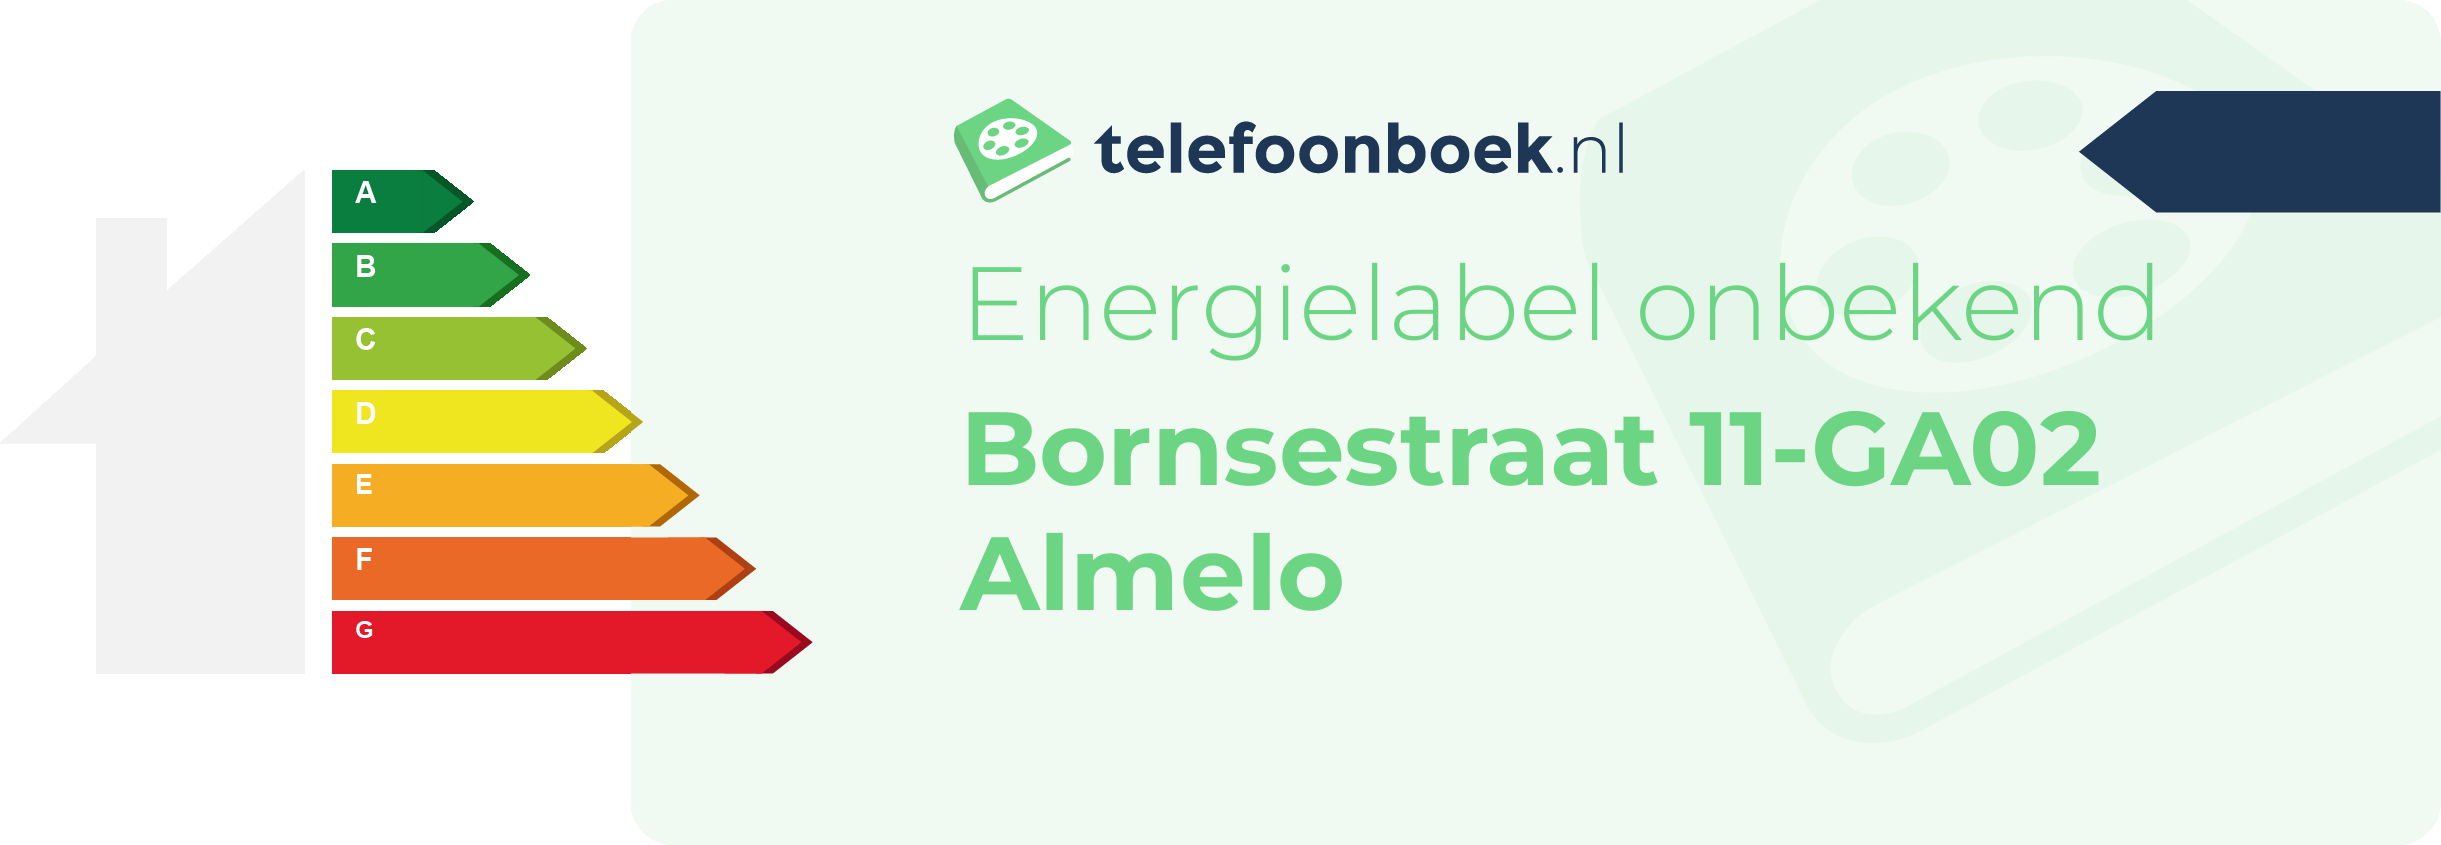 Energielabel Bornsestraat 11-GA02 Almelo